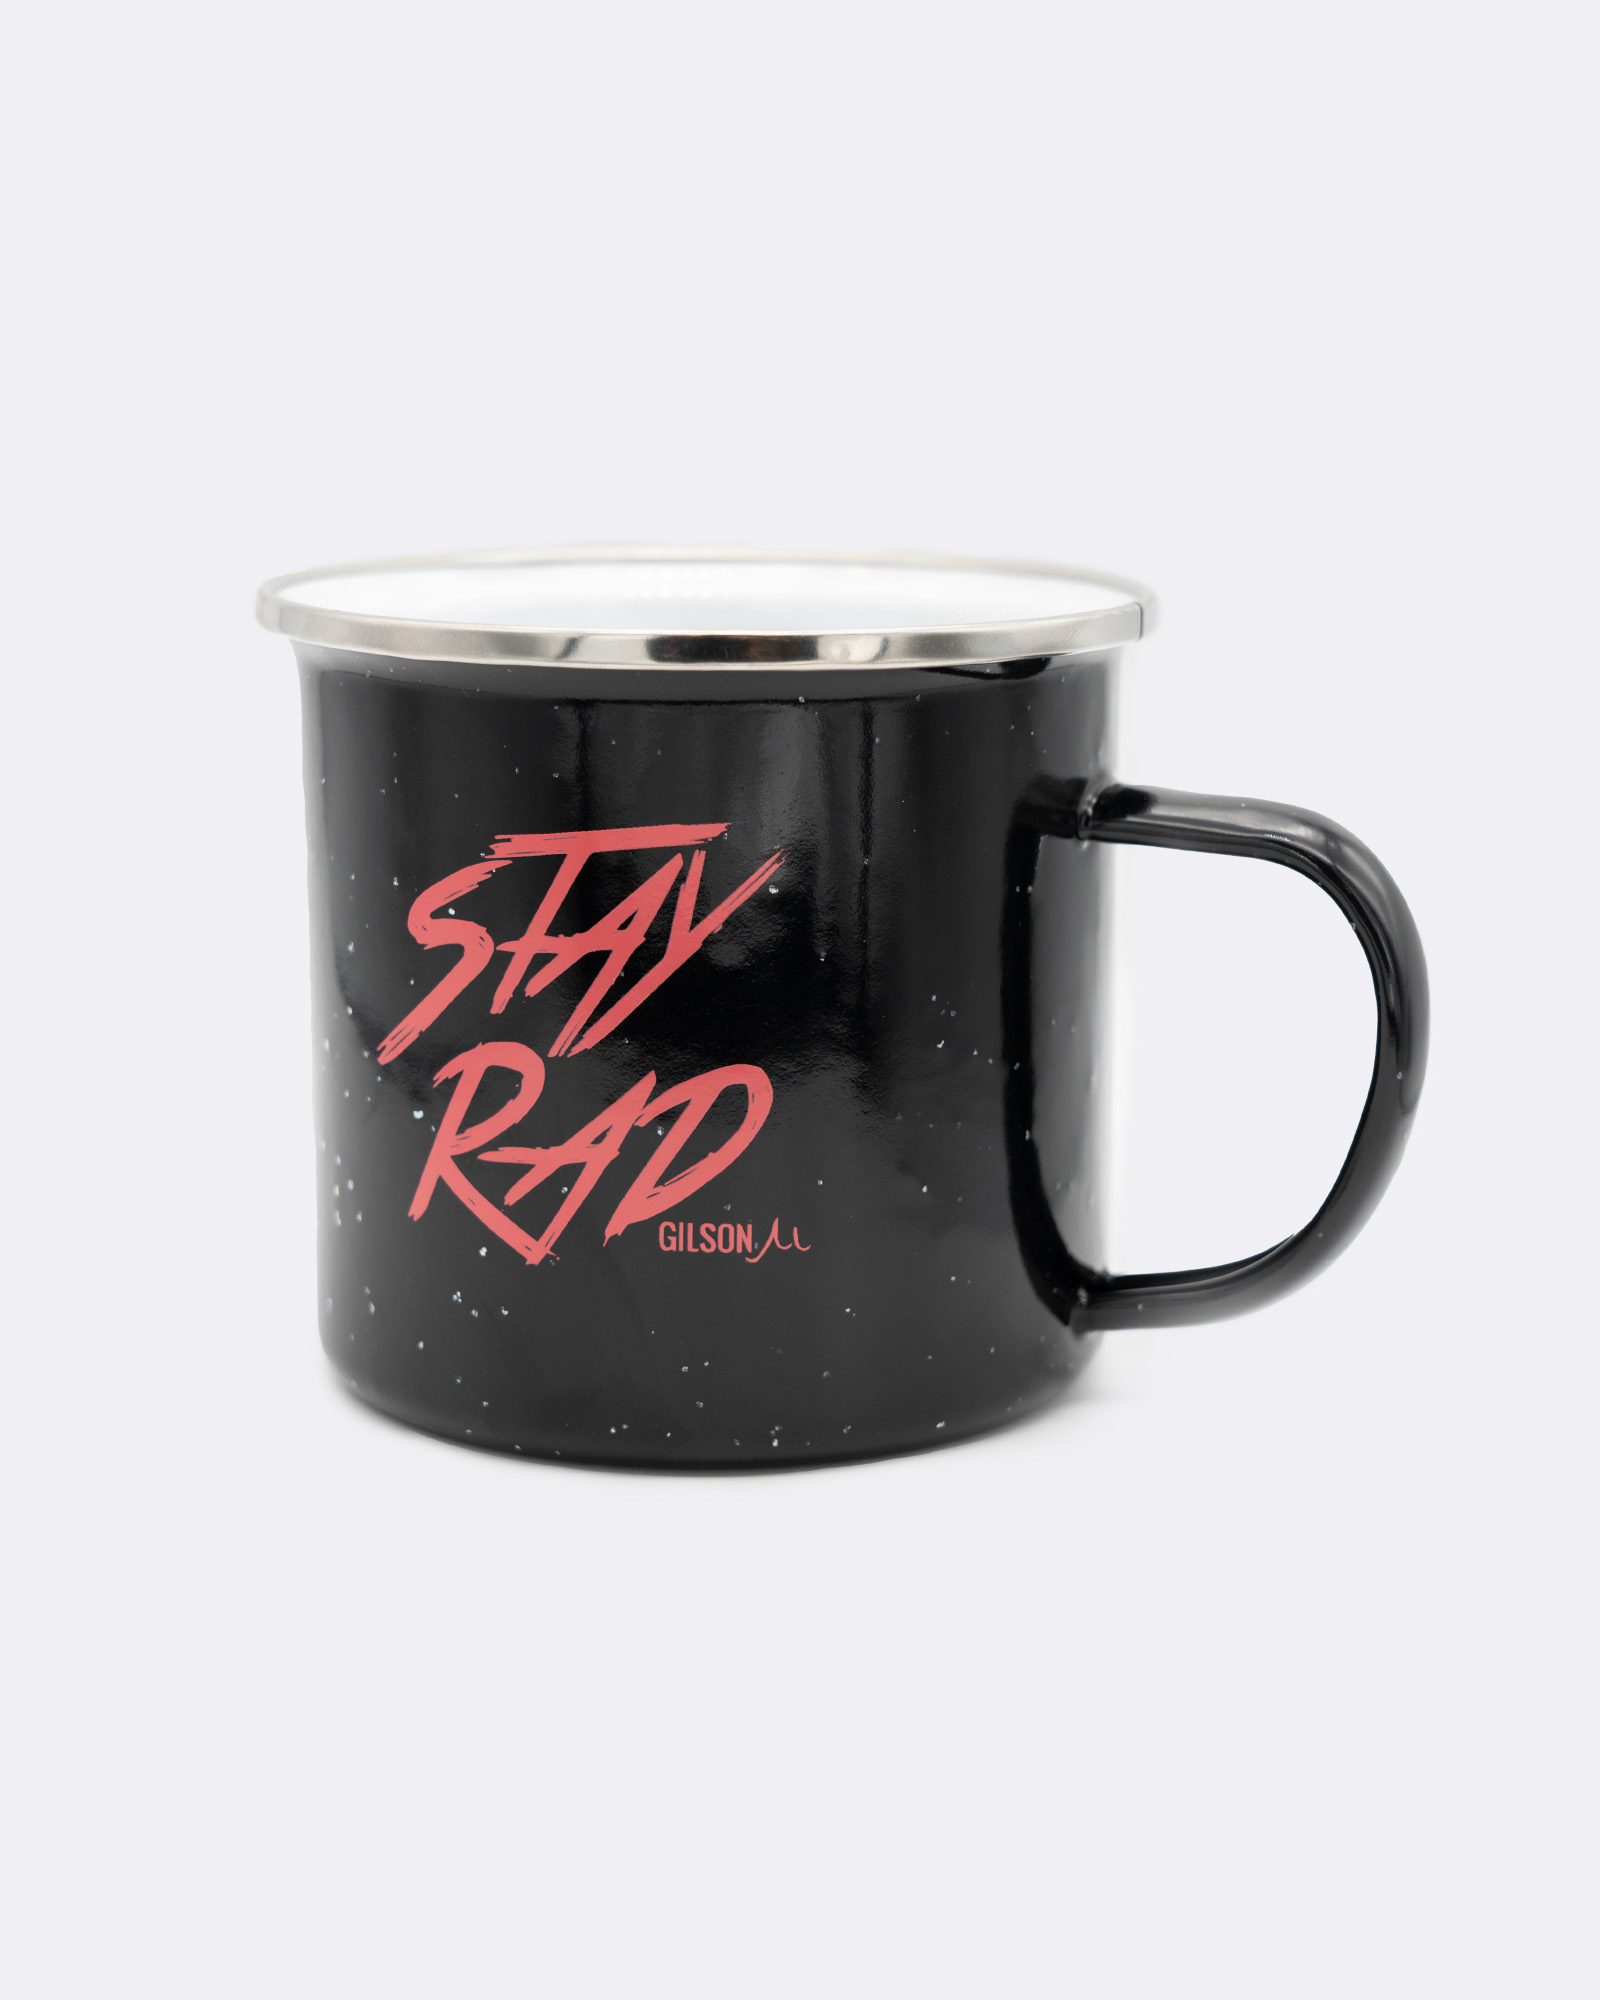 Stay Rad 
Steel Camp Mug graphics